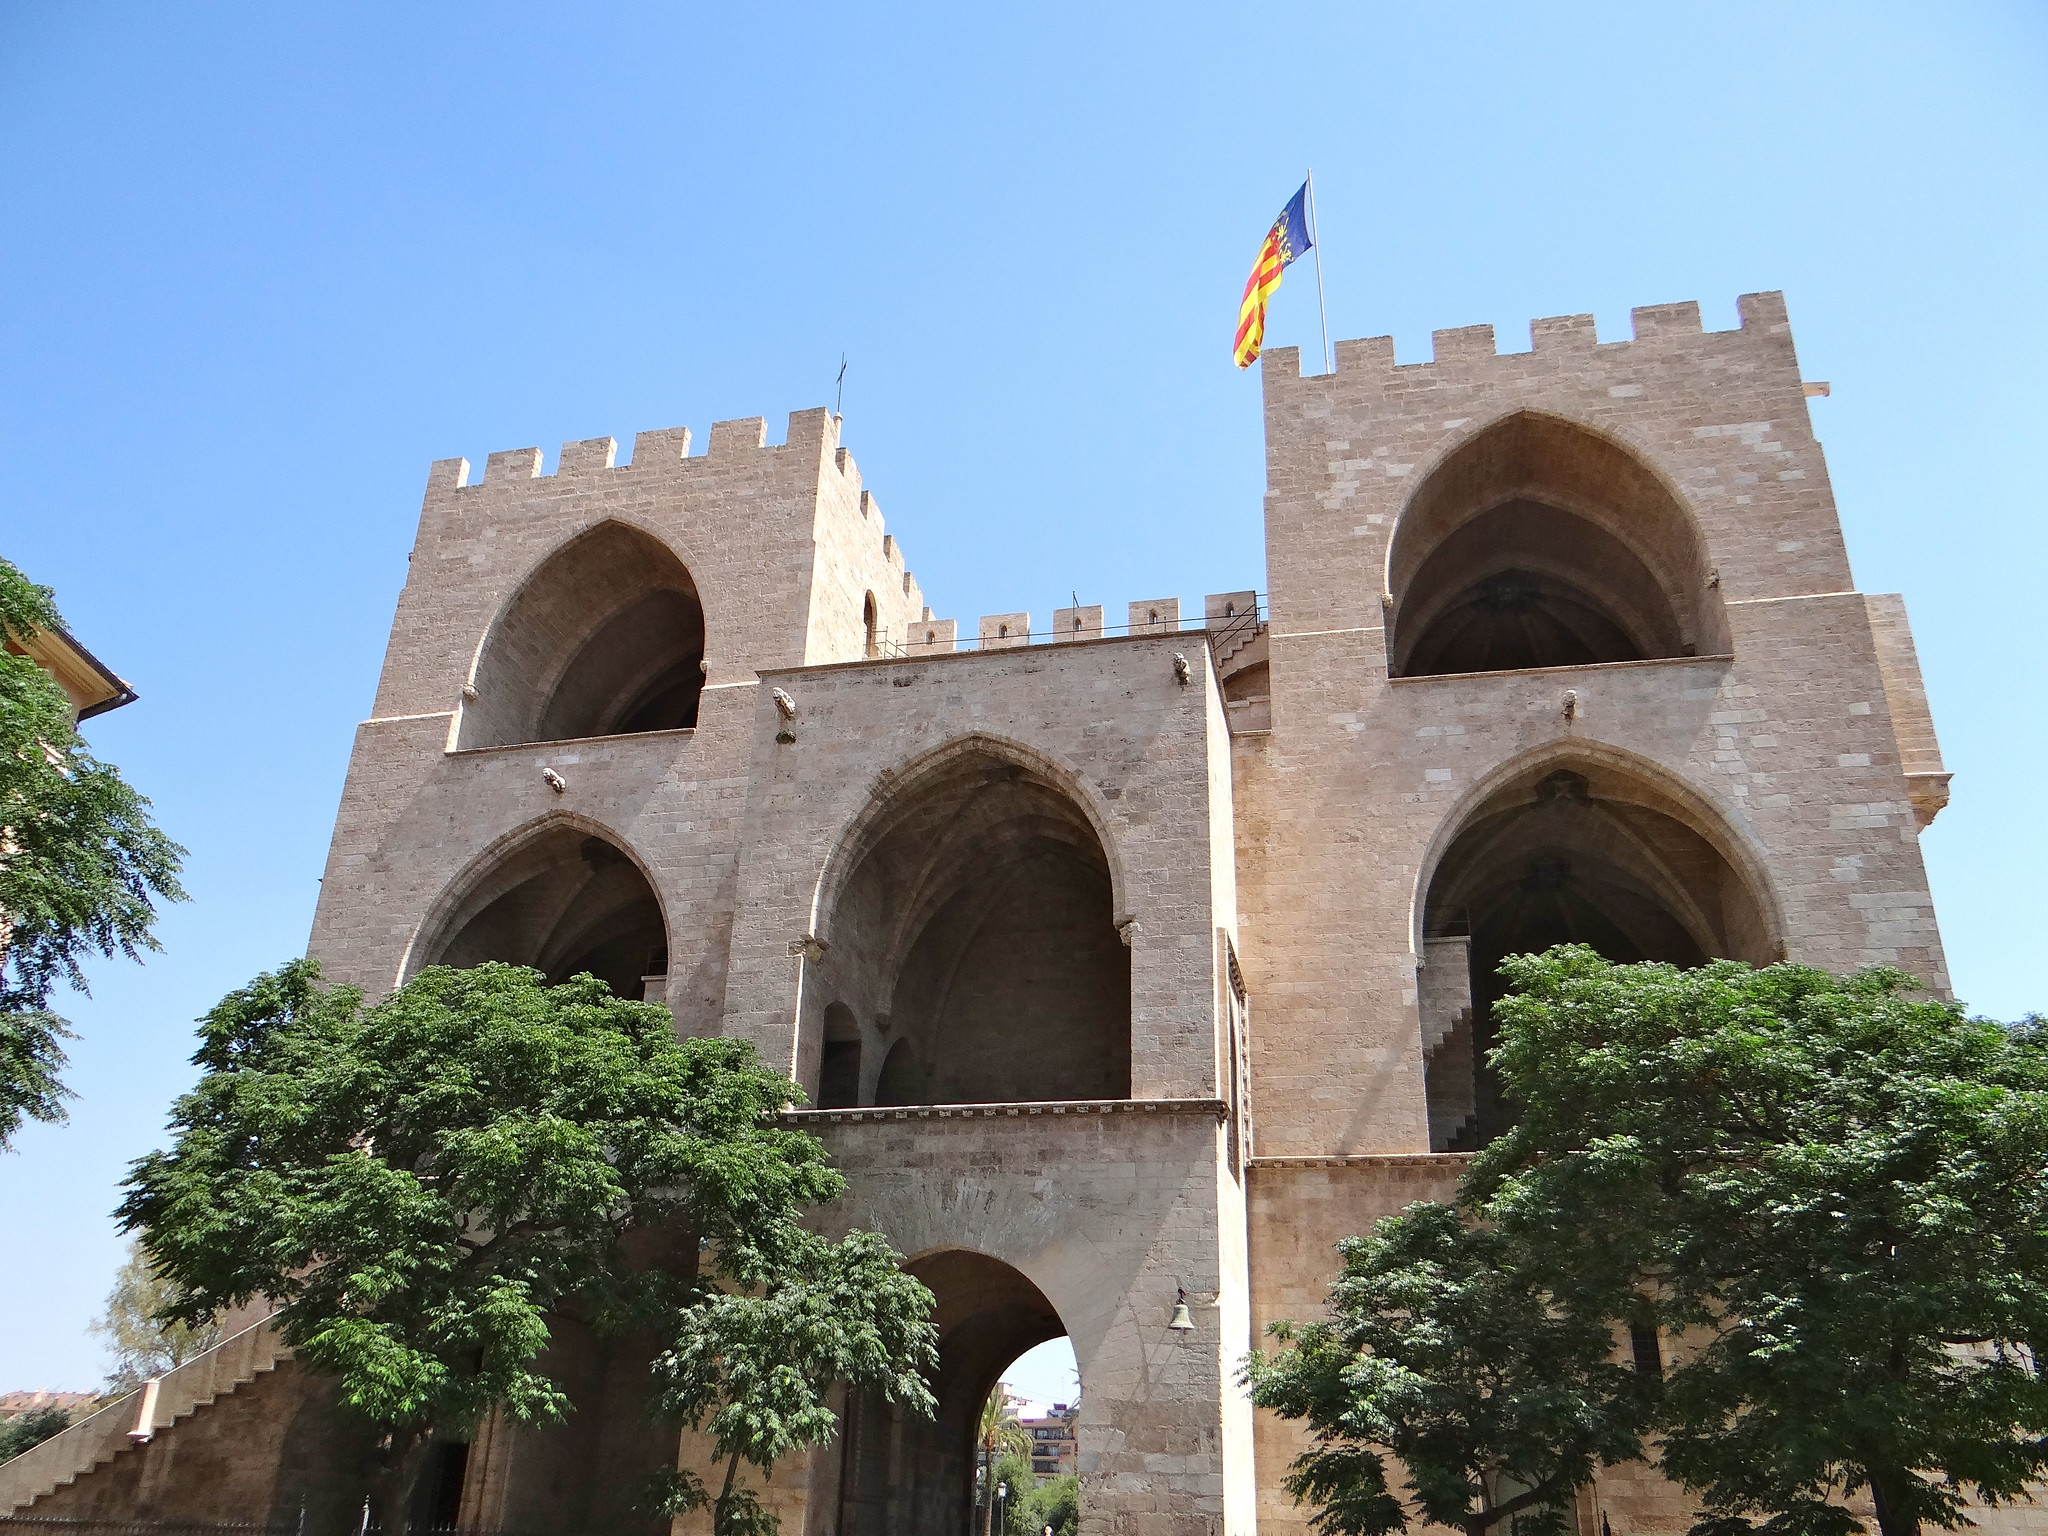 A Gate into the city of Valencia